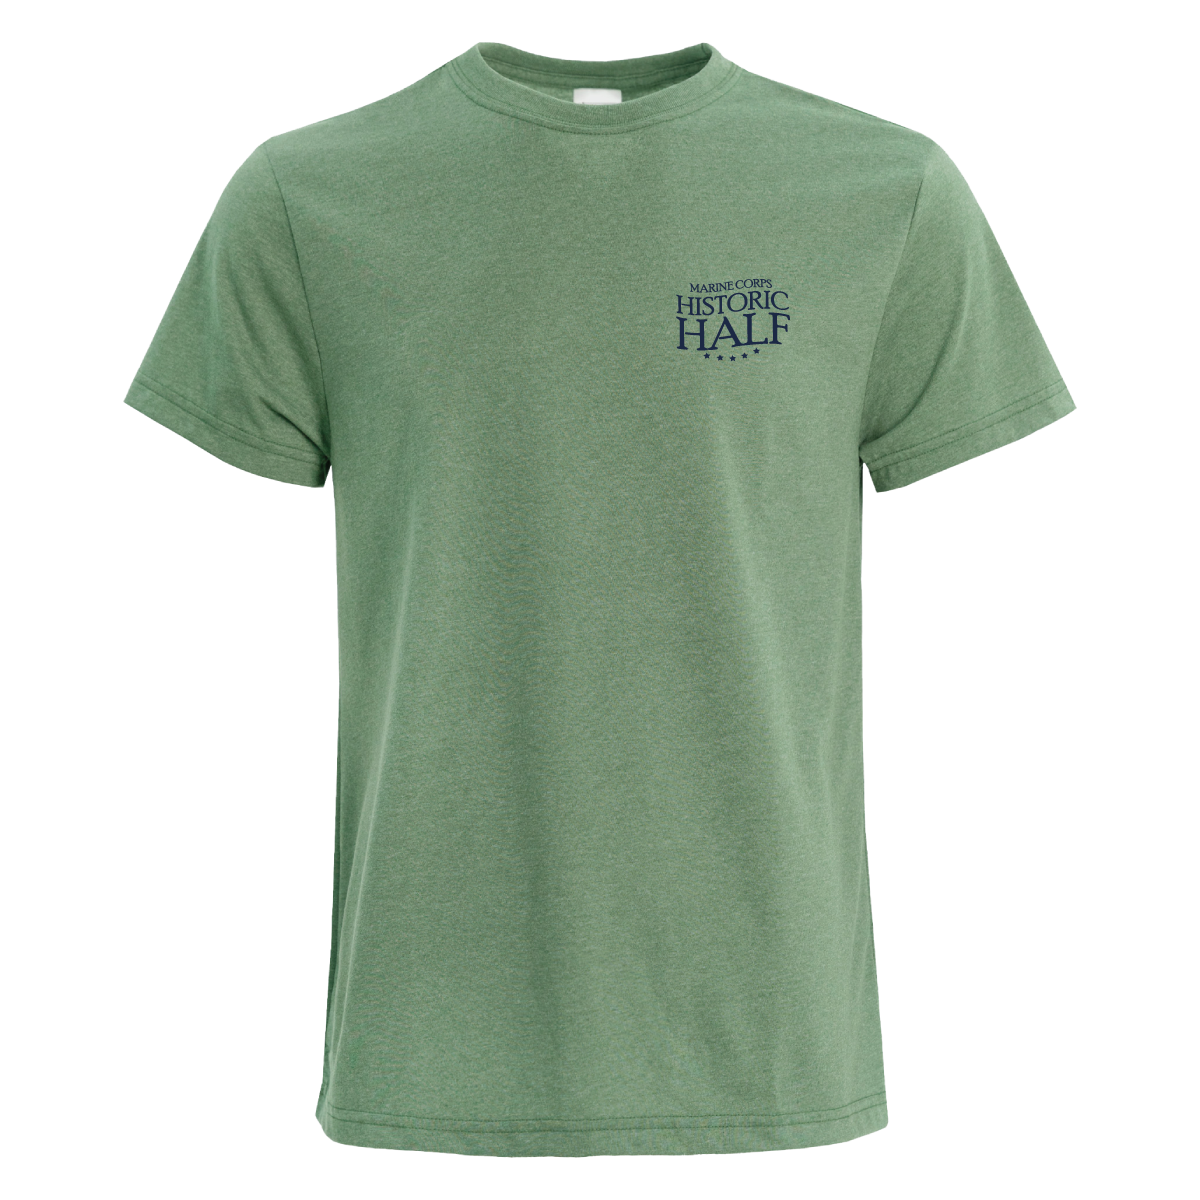 EC100 - Historic Half Short Sleeve T-Shirt